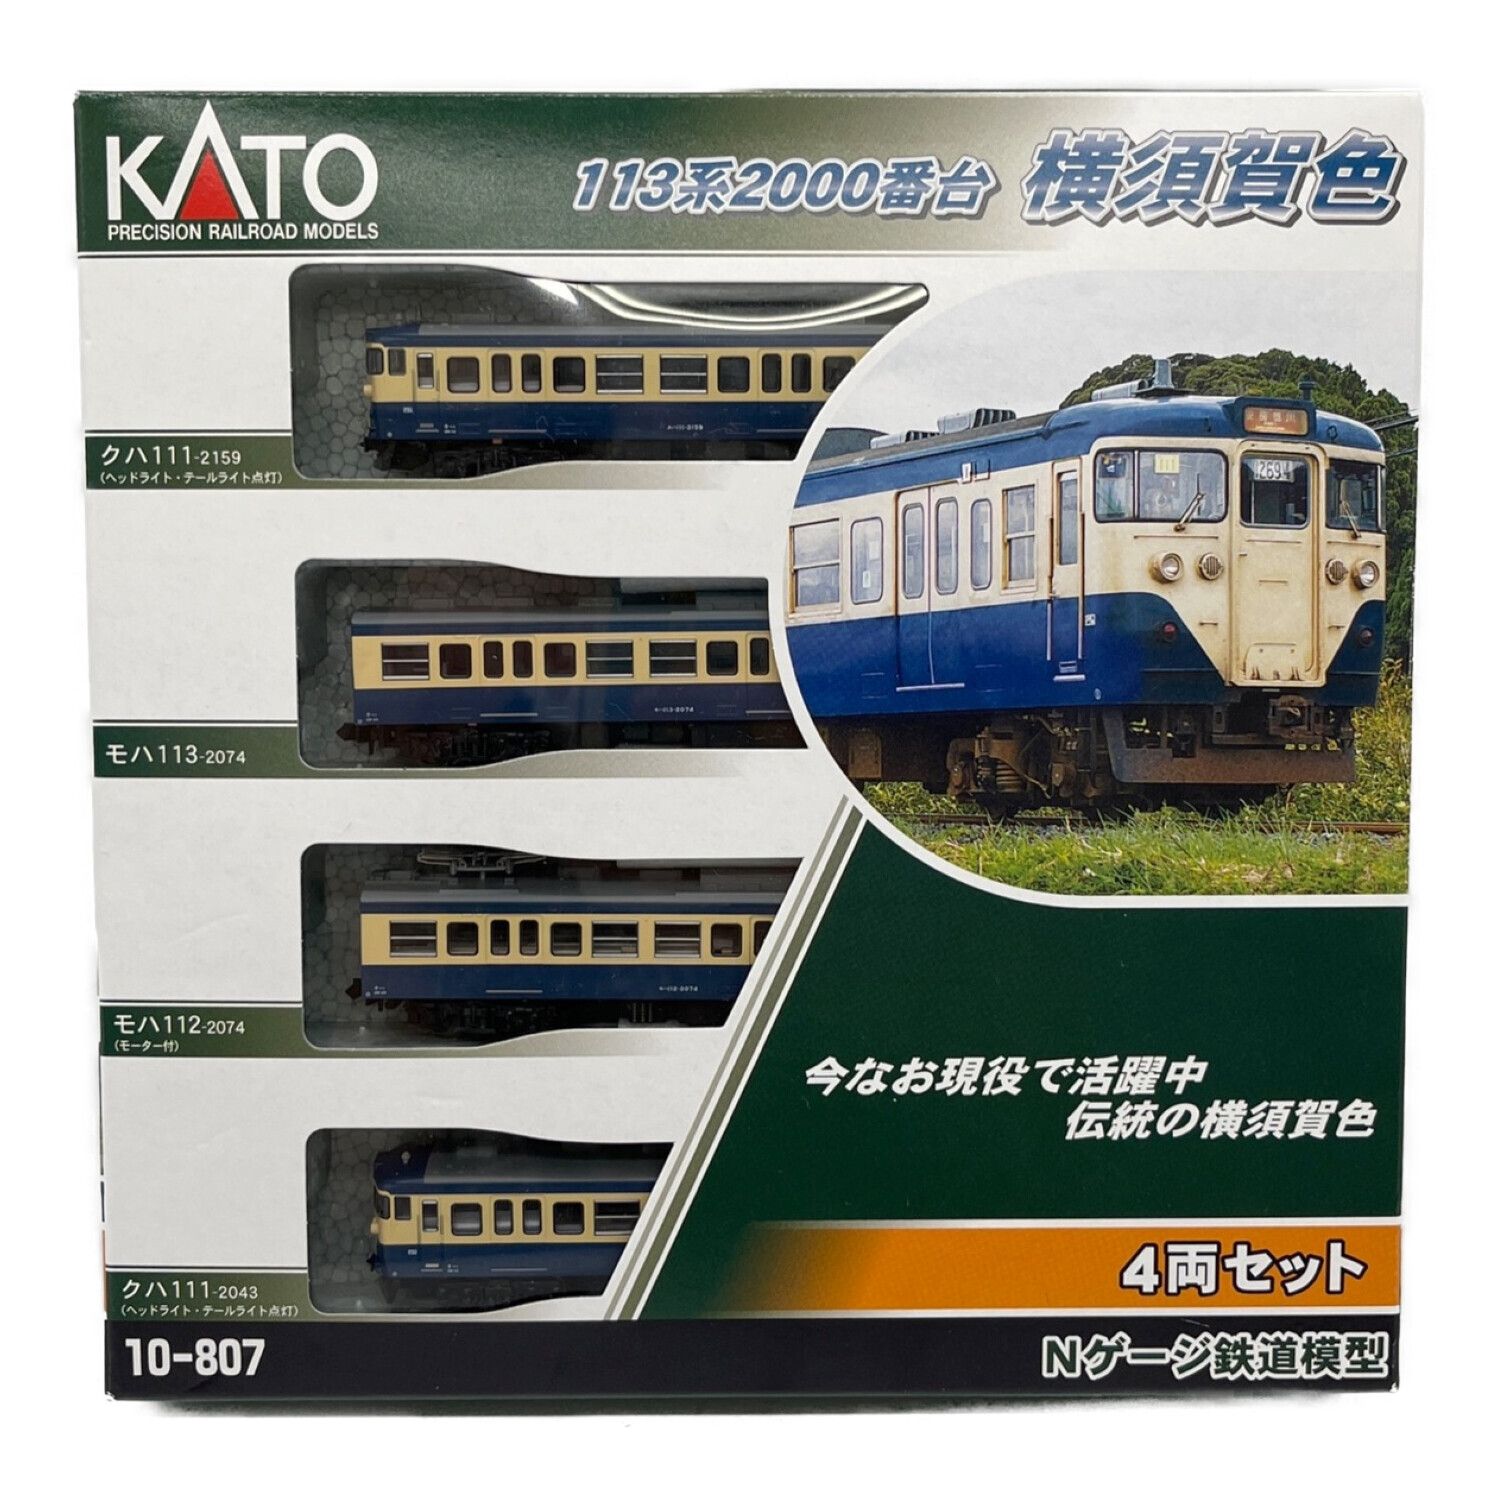 KATO (カトー) Nゲージ鉄道模型 13系2000番台 横須賀色 4両セット｜トレファクONLINE